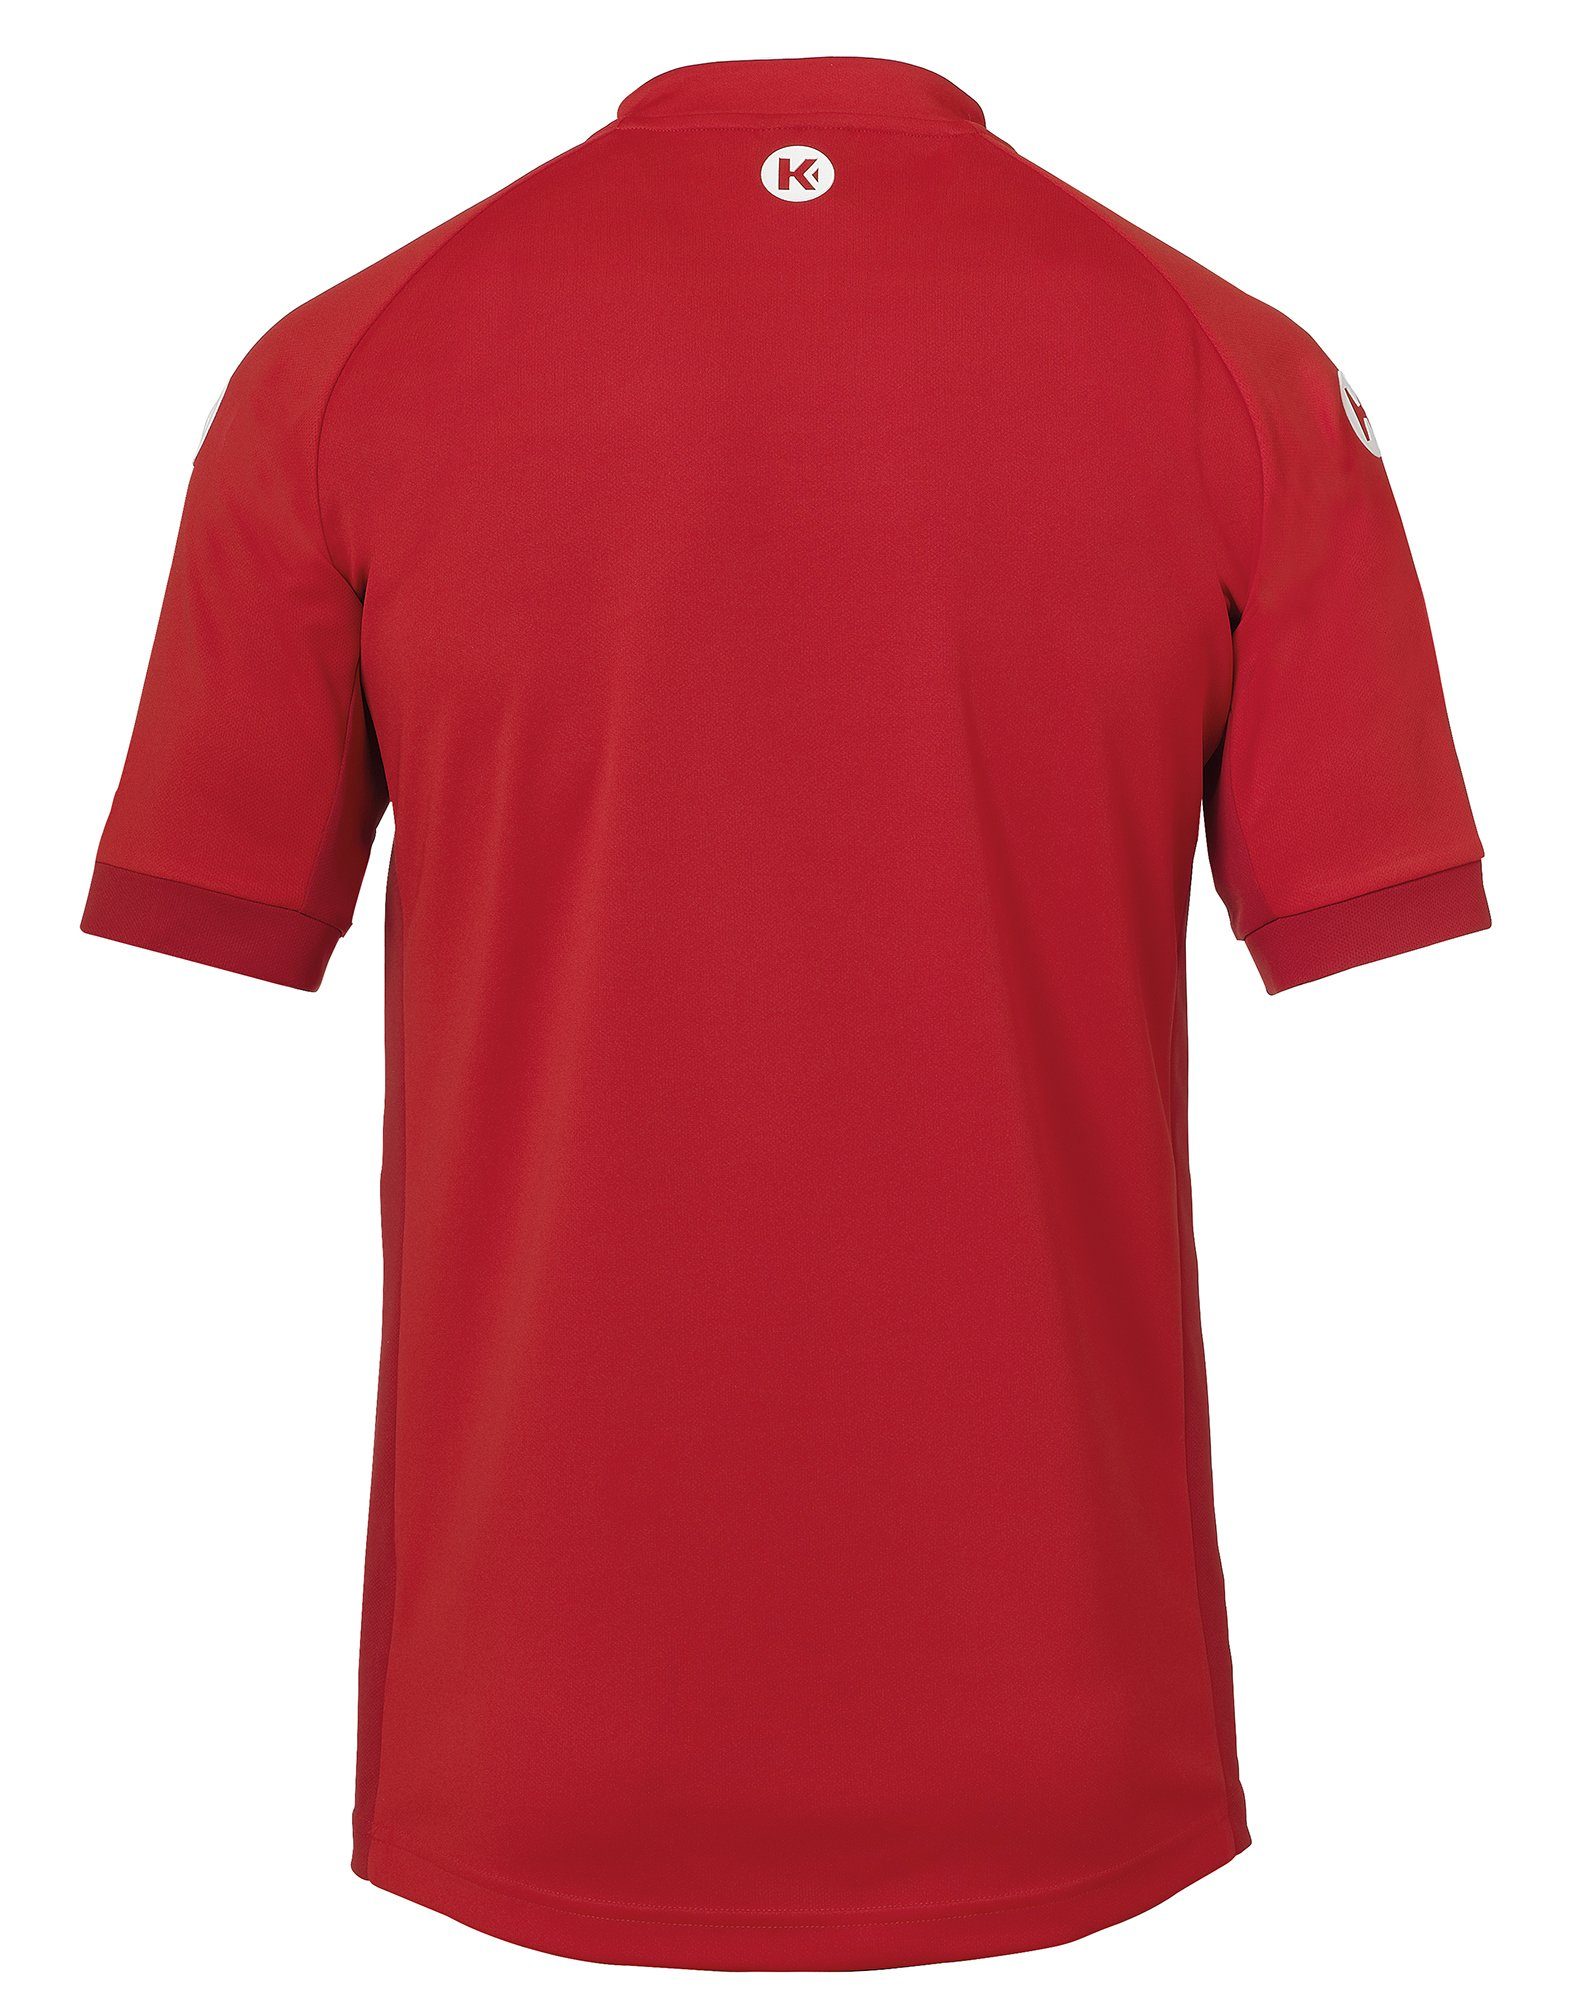 PRIME schnelltrocknend TRIKOT rot/chilirot Kempa Trainingsshirt Kempa Shirt